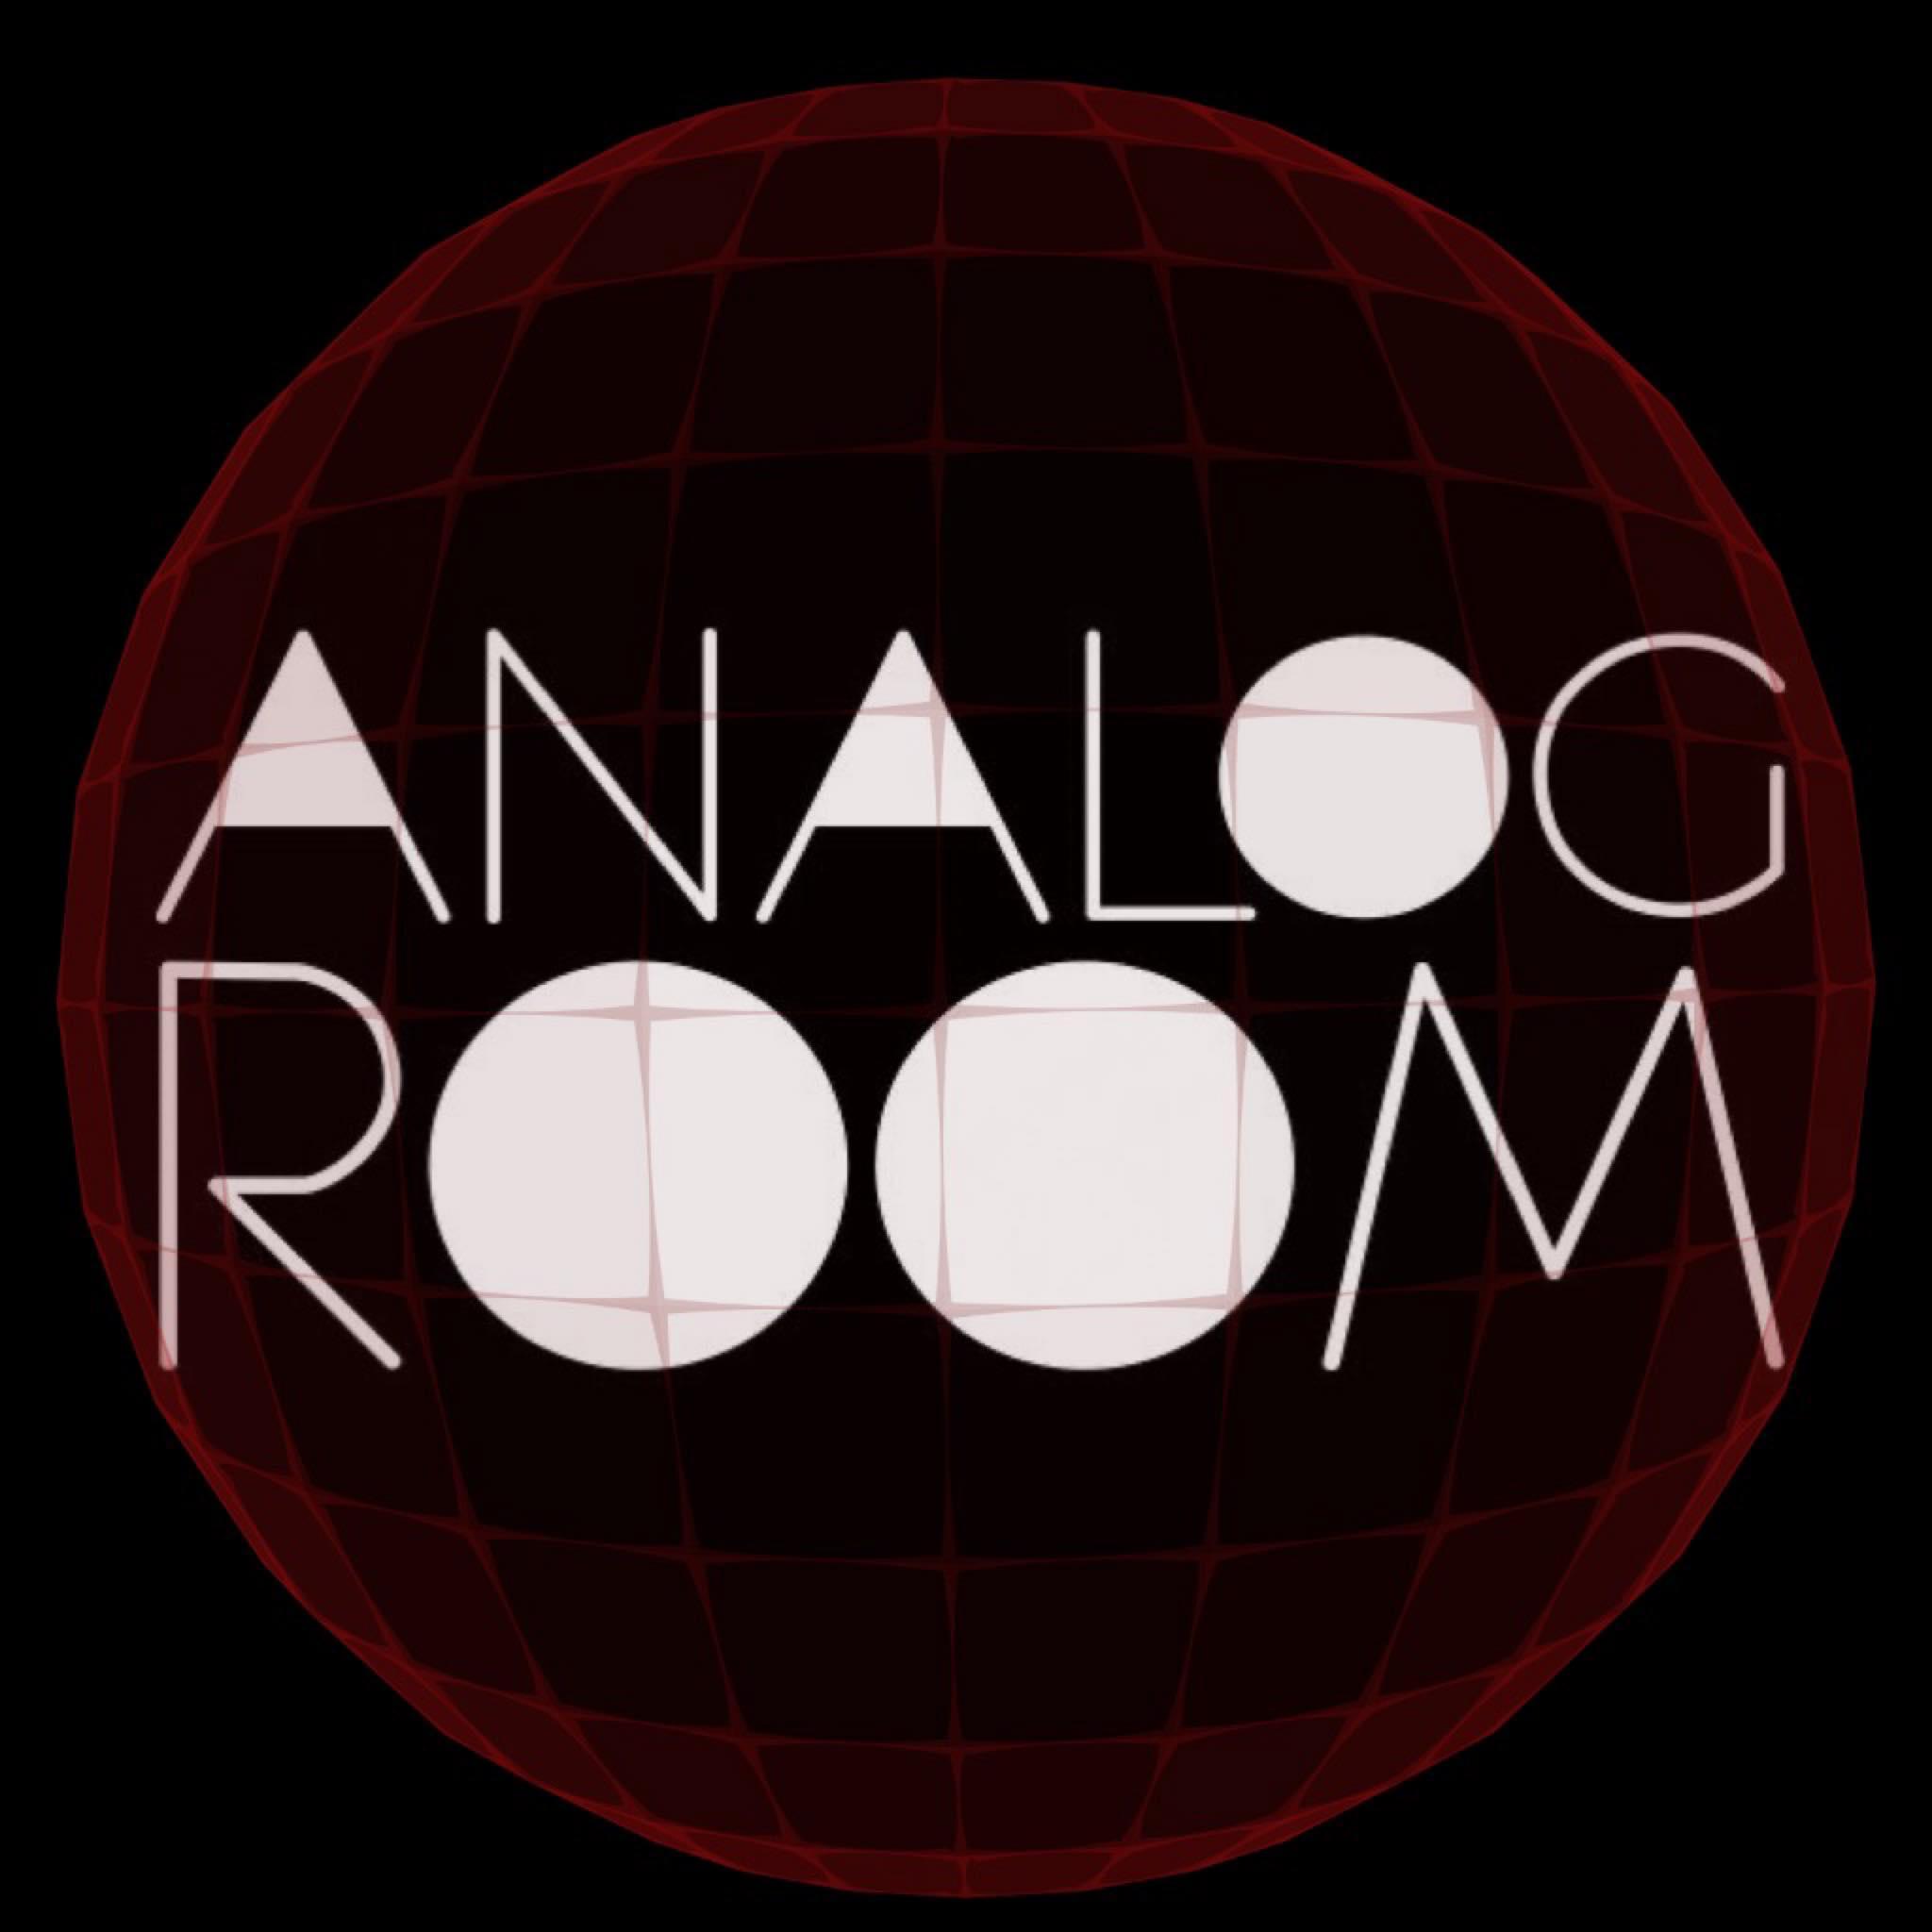 Analog Room pres. Siamak Amidi - TODD